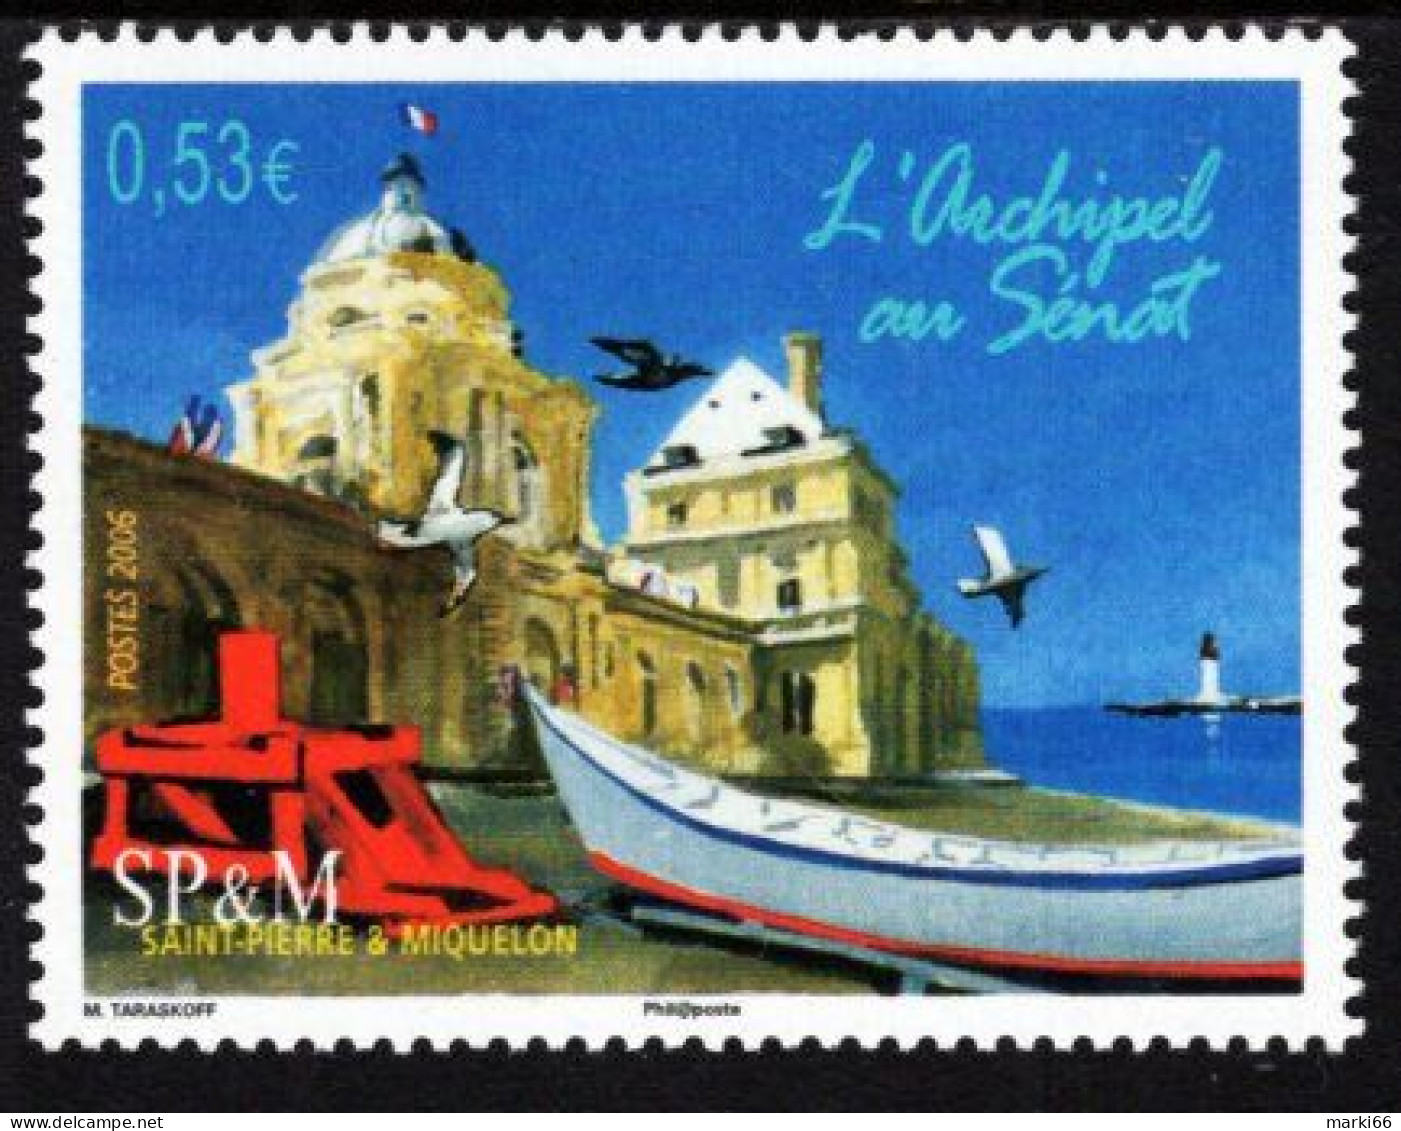 St. Pierre & Miquelon - 2006 - SPM Senate And Philately - Stamp Salon In Paris - Mint Stamp - Neufs